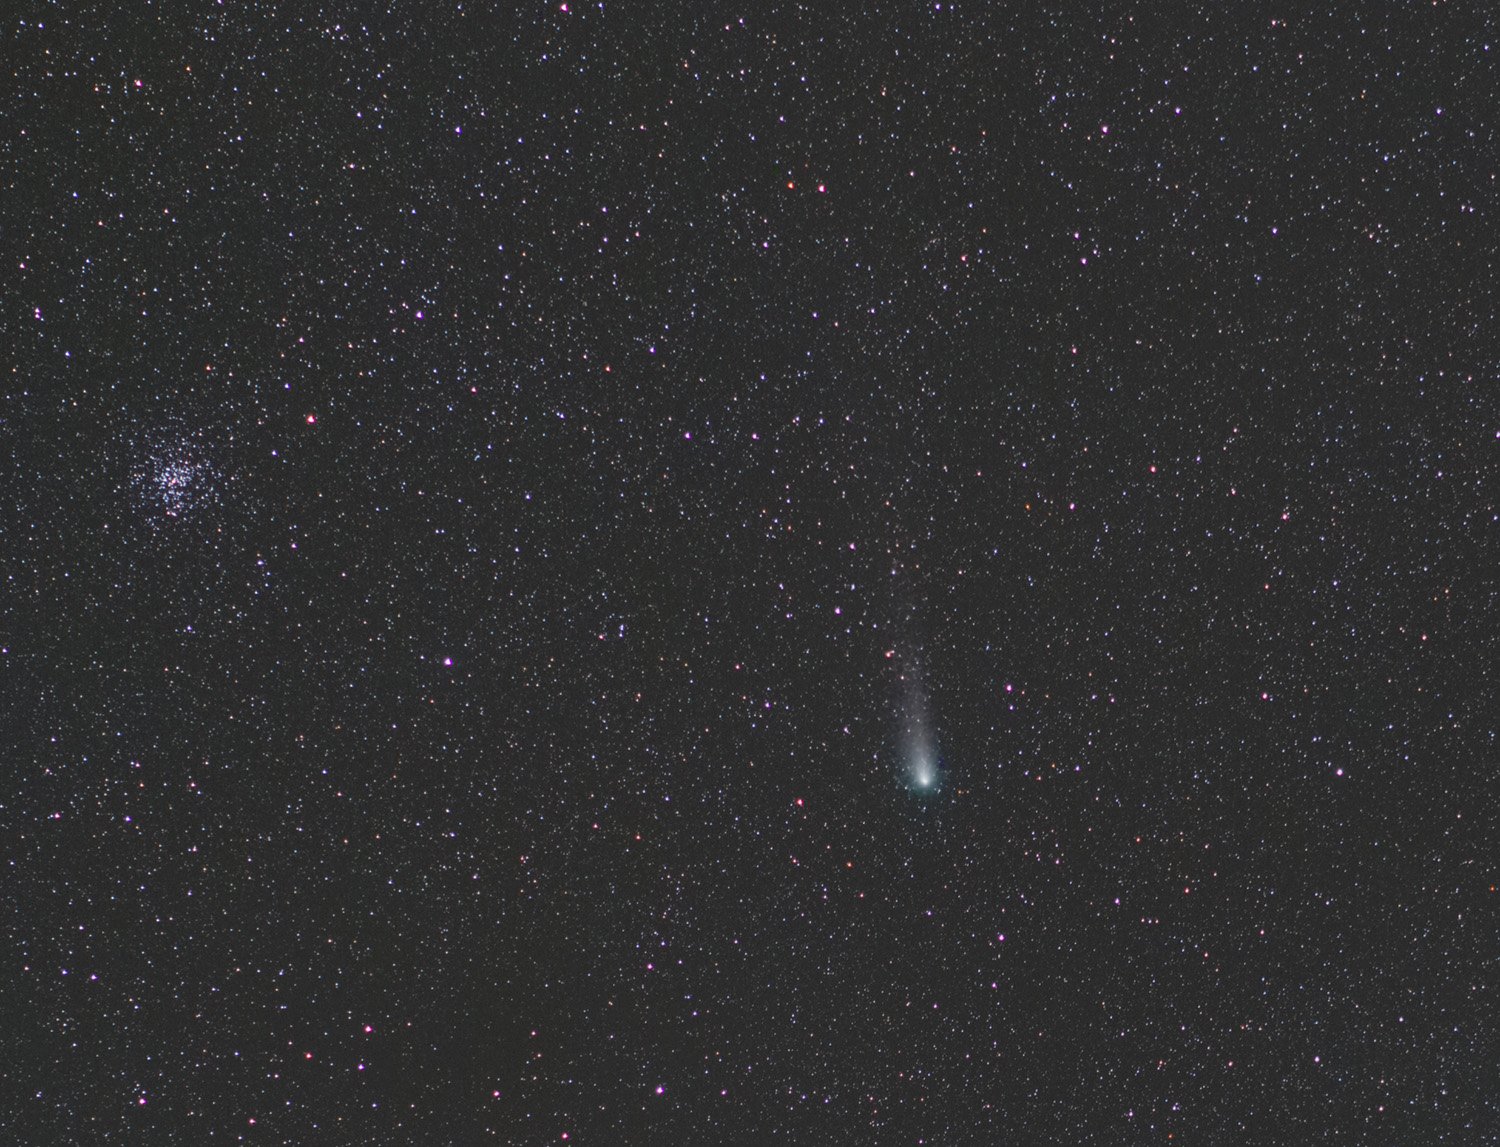 Komet 21P/Giacobini-Zinner im Fuhrmann M 37